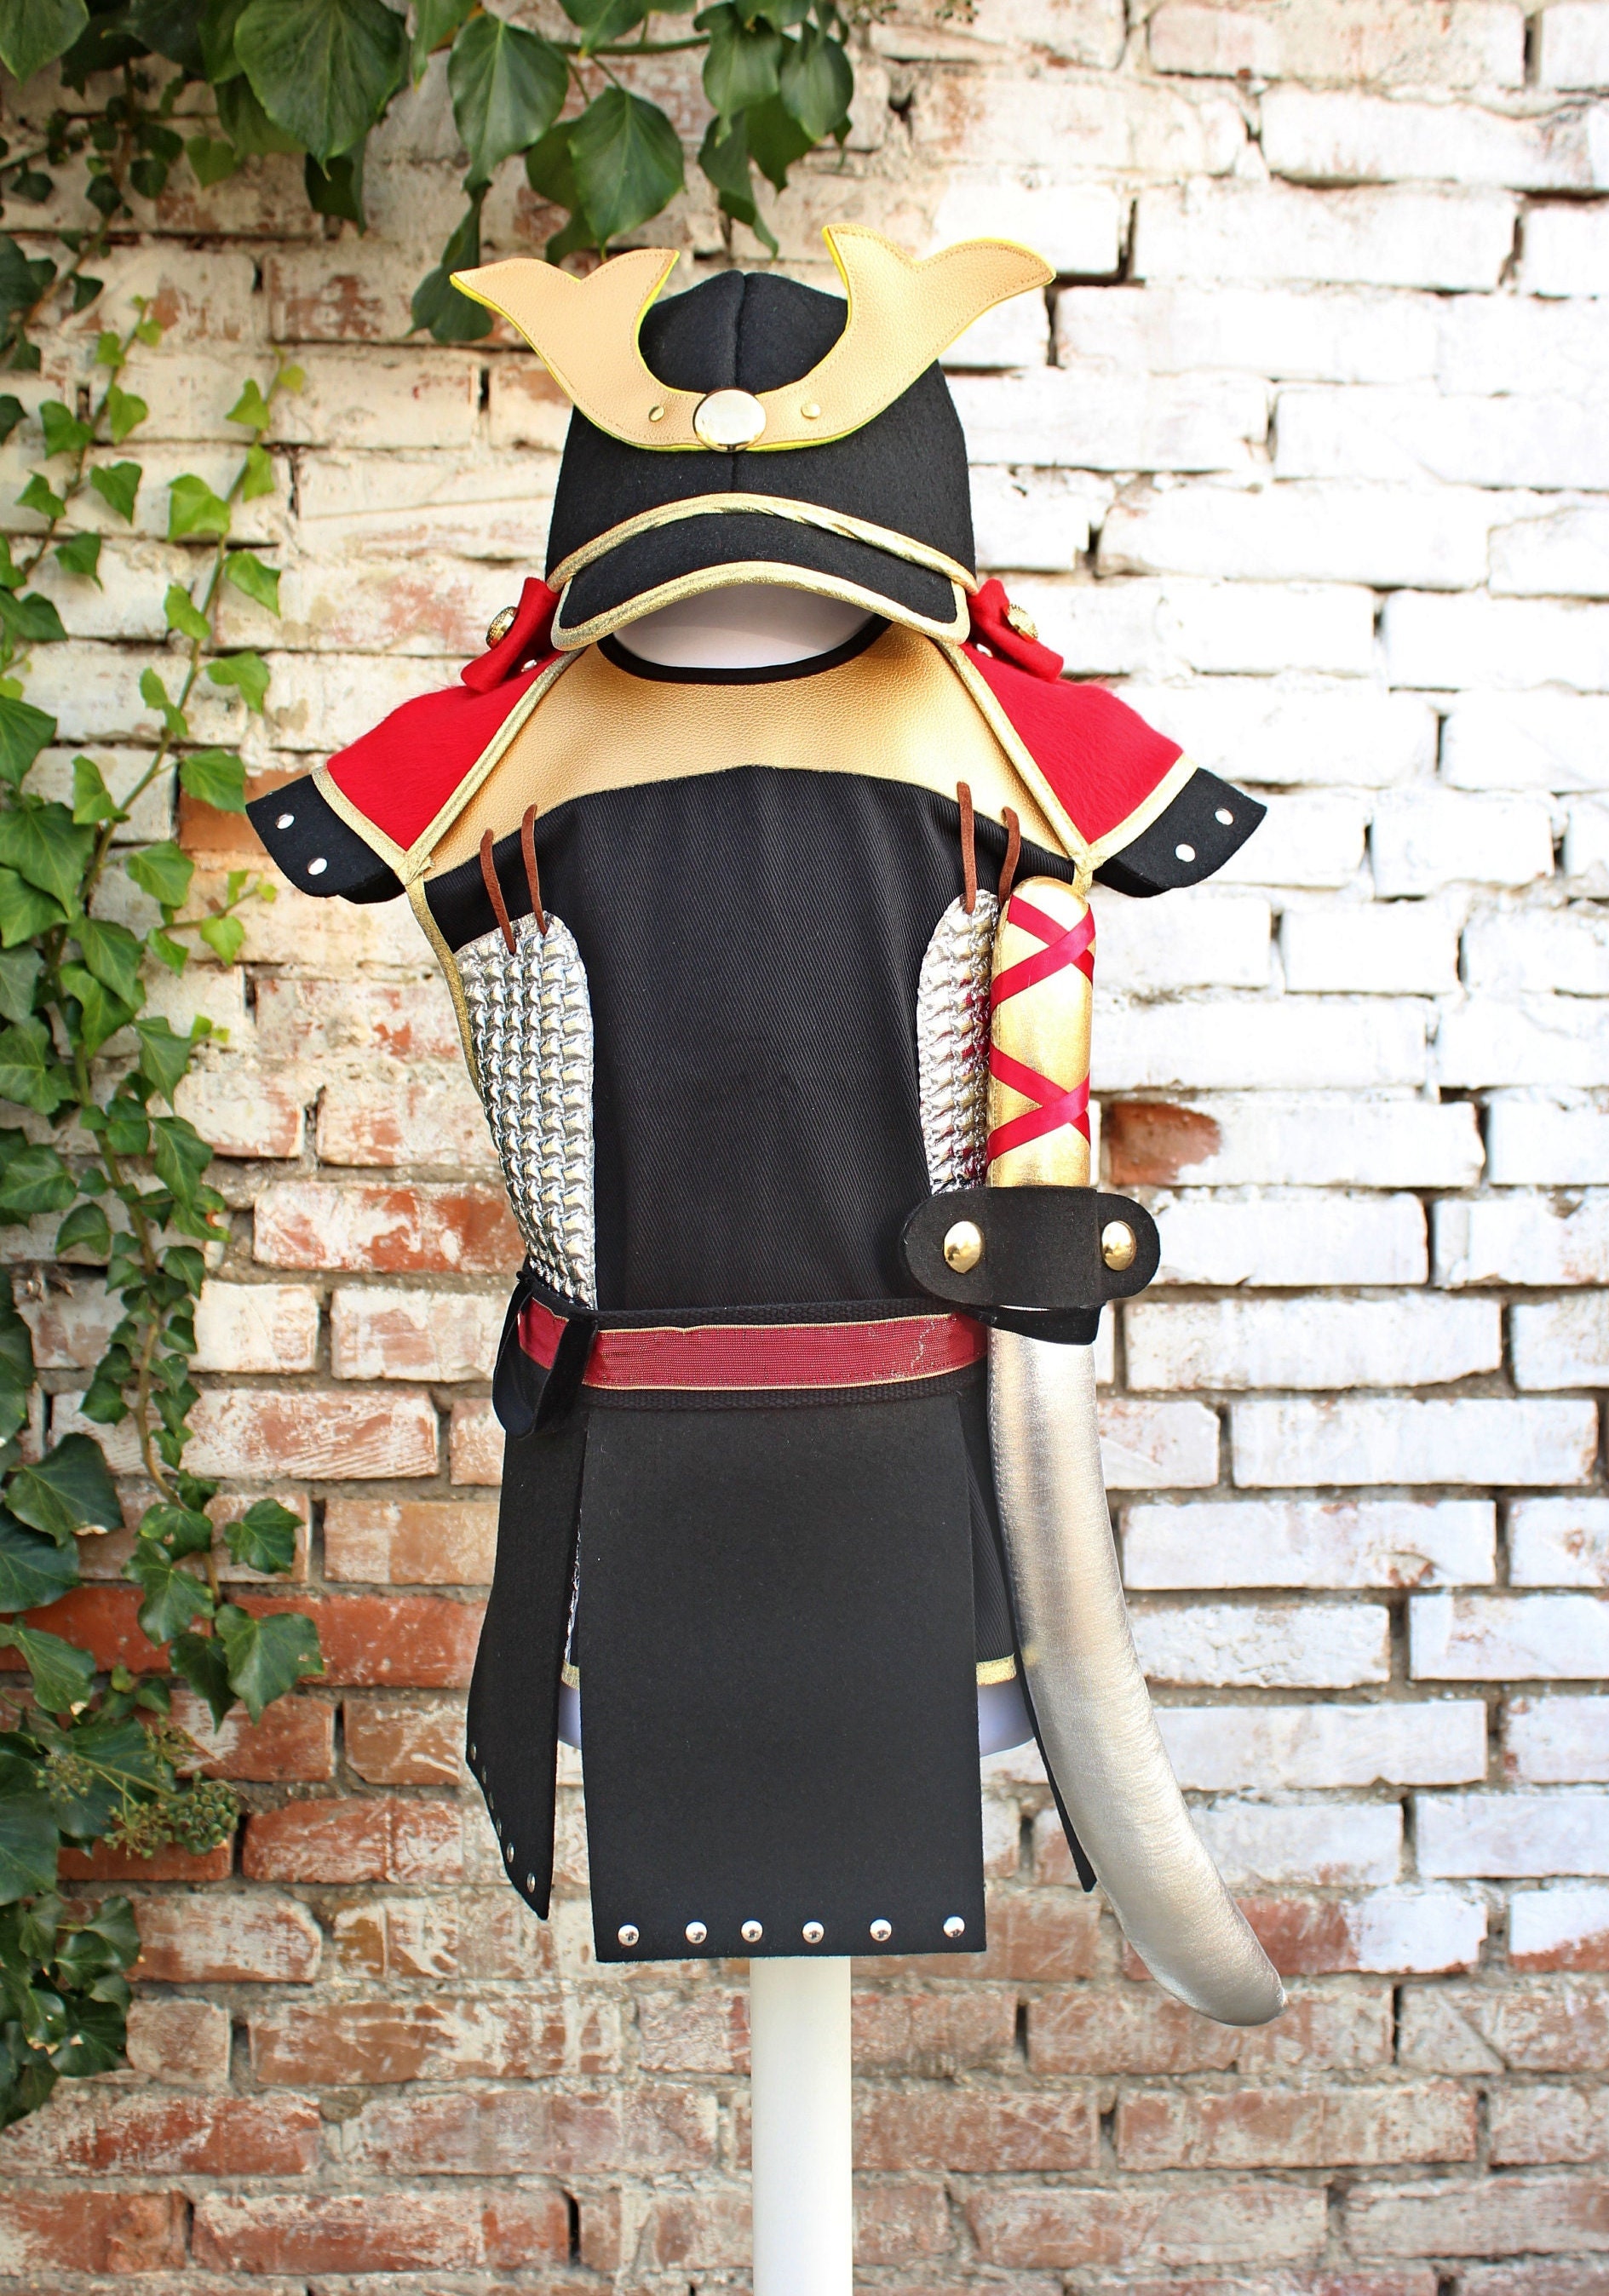 Garçons Rouge Costume Ninja Samouraï Warrior Enfants Déguisement